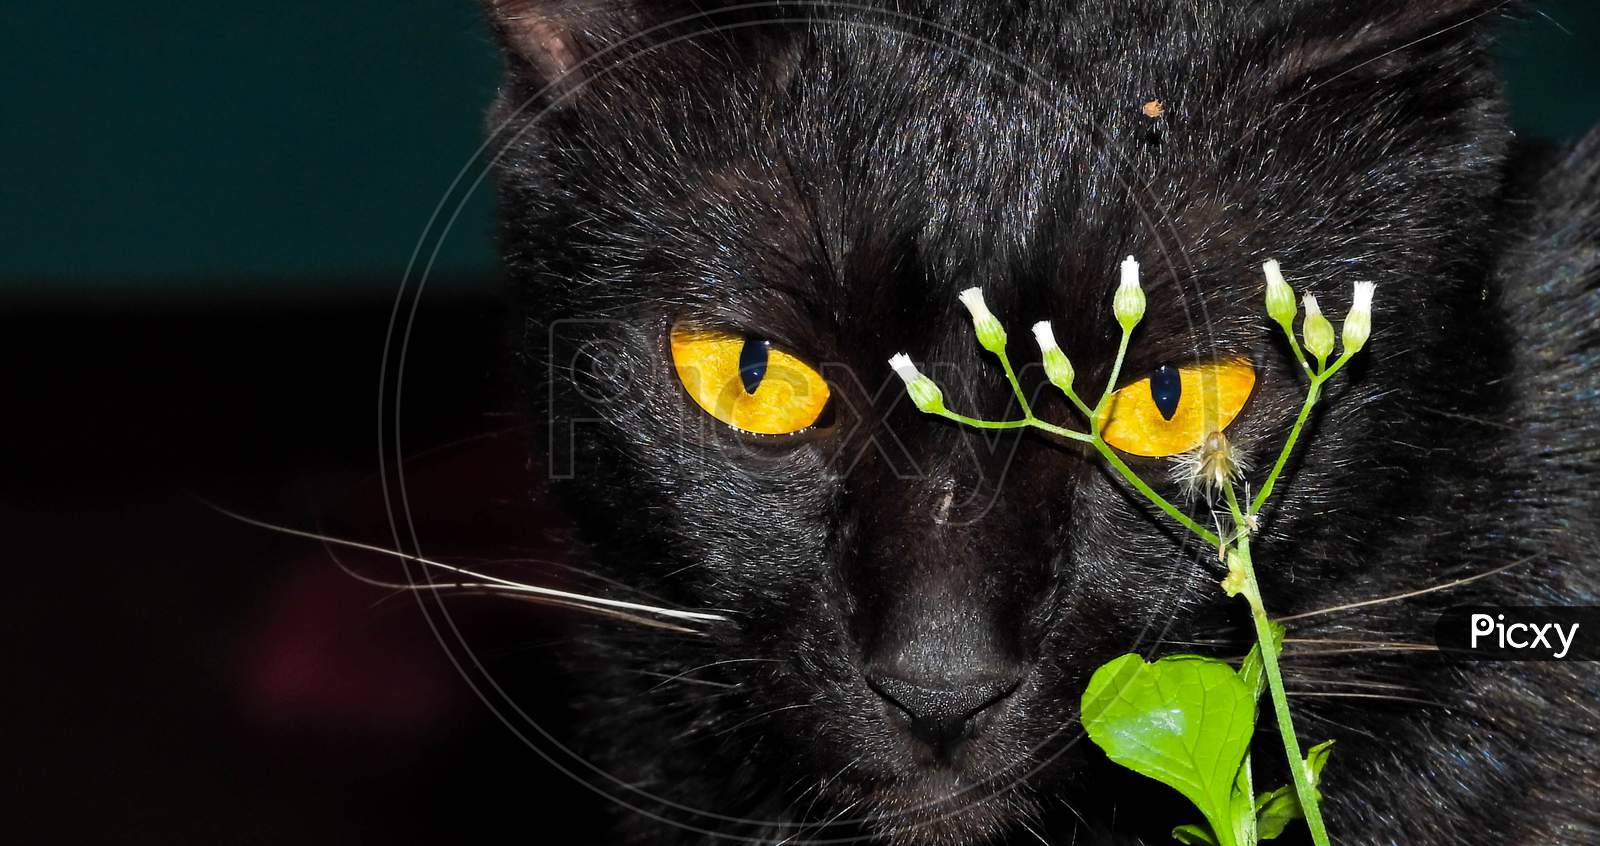 Eye of the black cat.